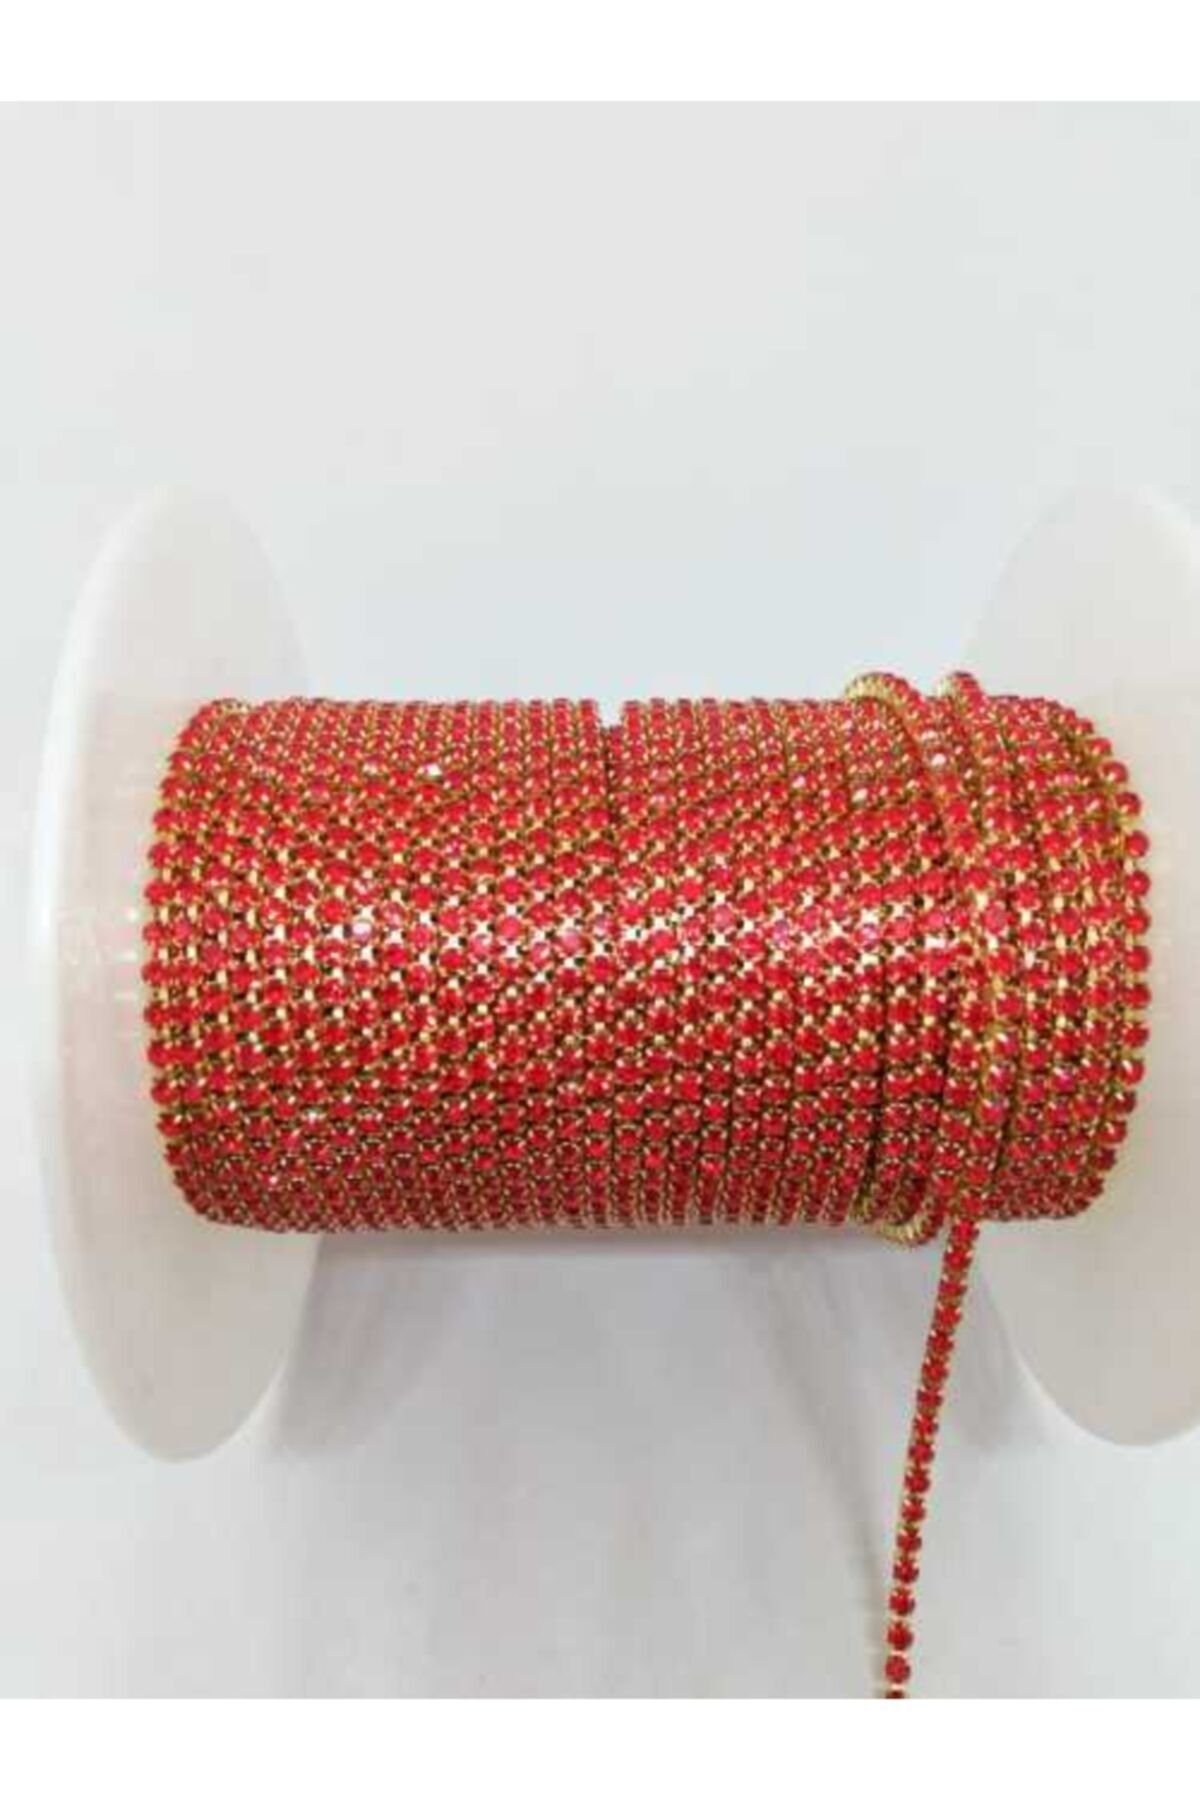 yiğit aksesuar Ss 8-2 mm 1 Top Kırmızı Kristal Sık Şerit